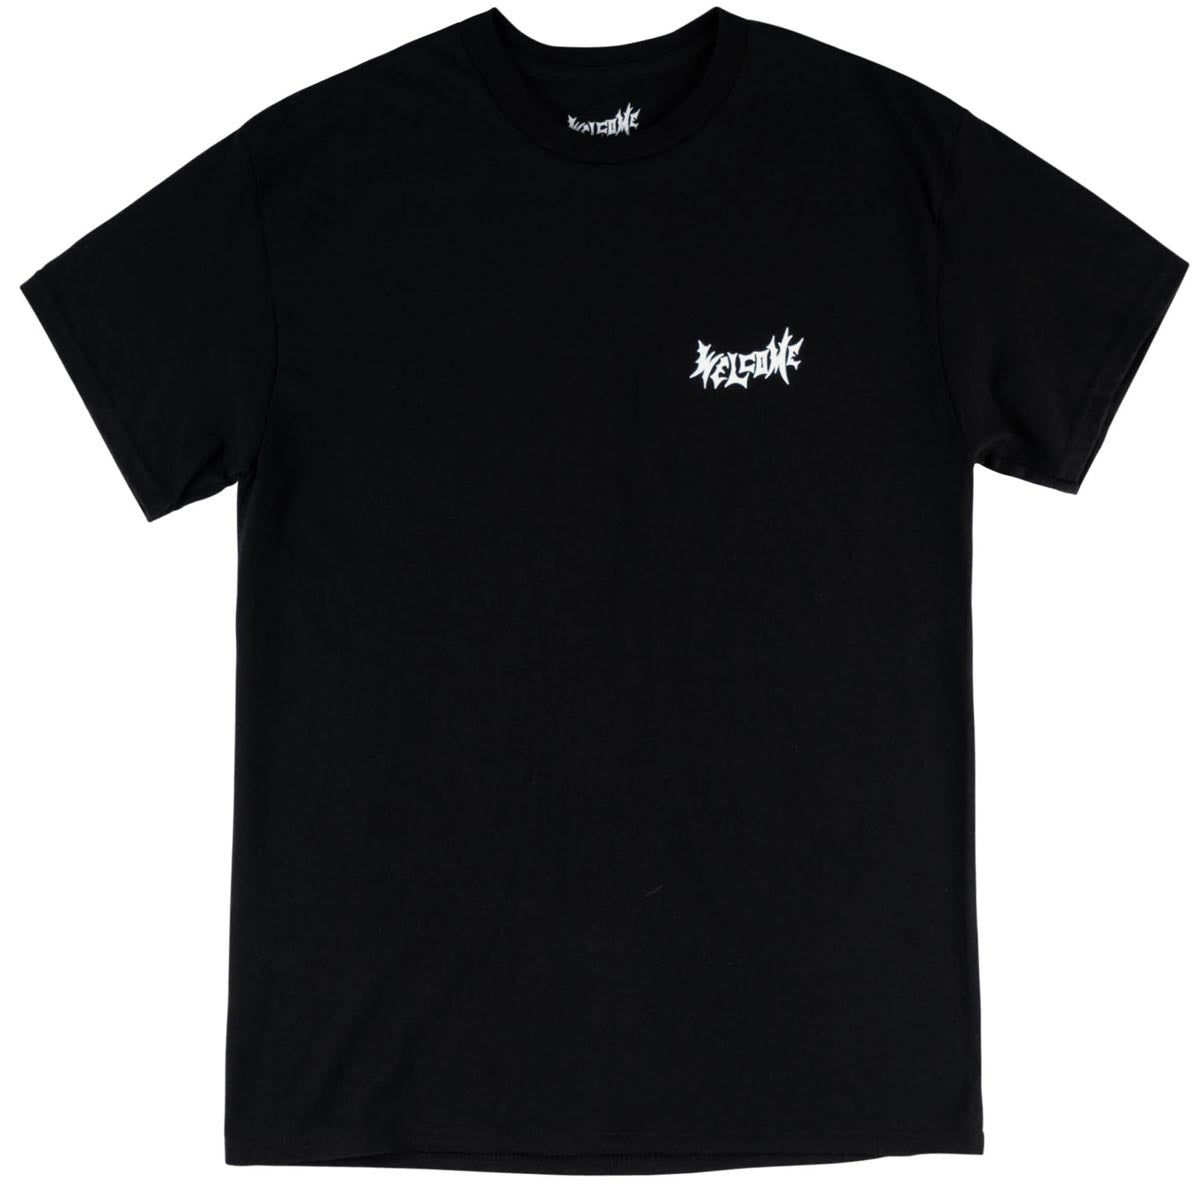 Welcome Nephilim T-Shirt - Black/White image 2